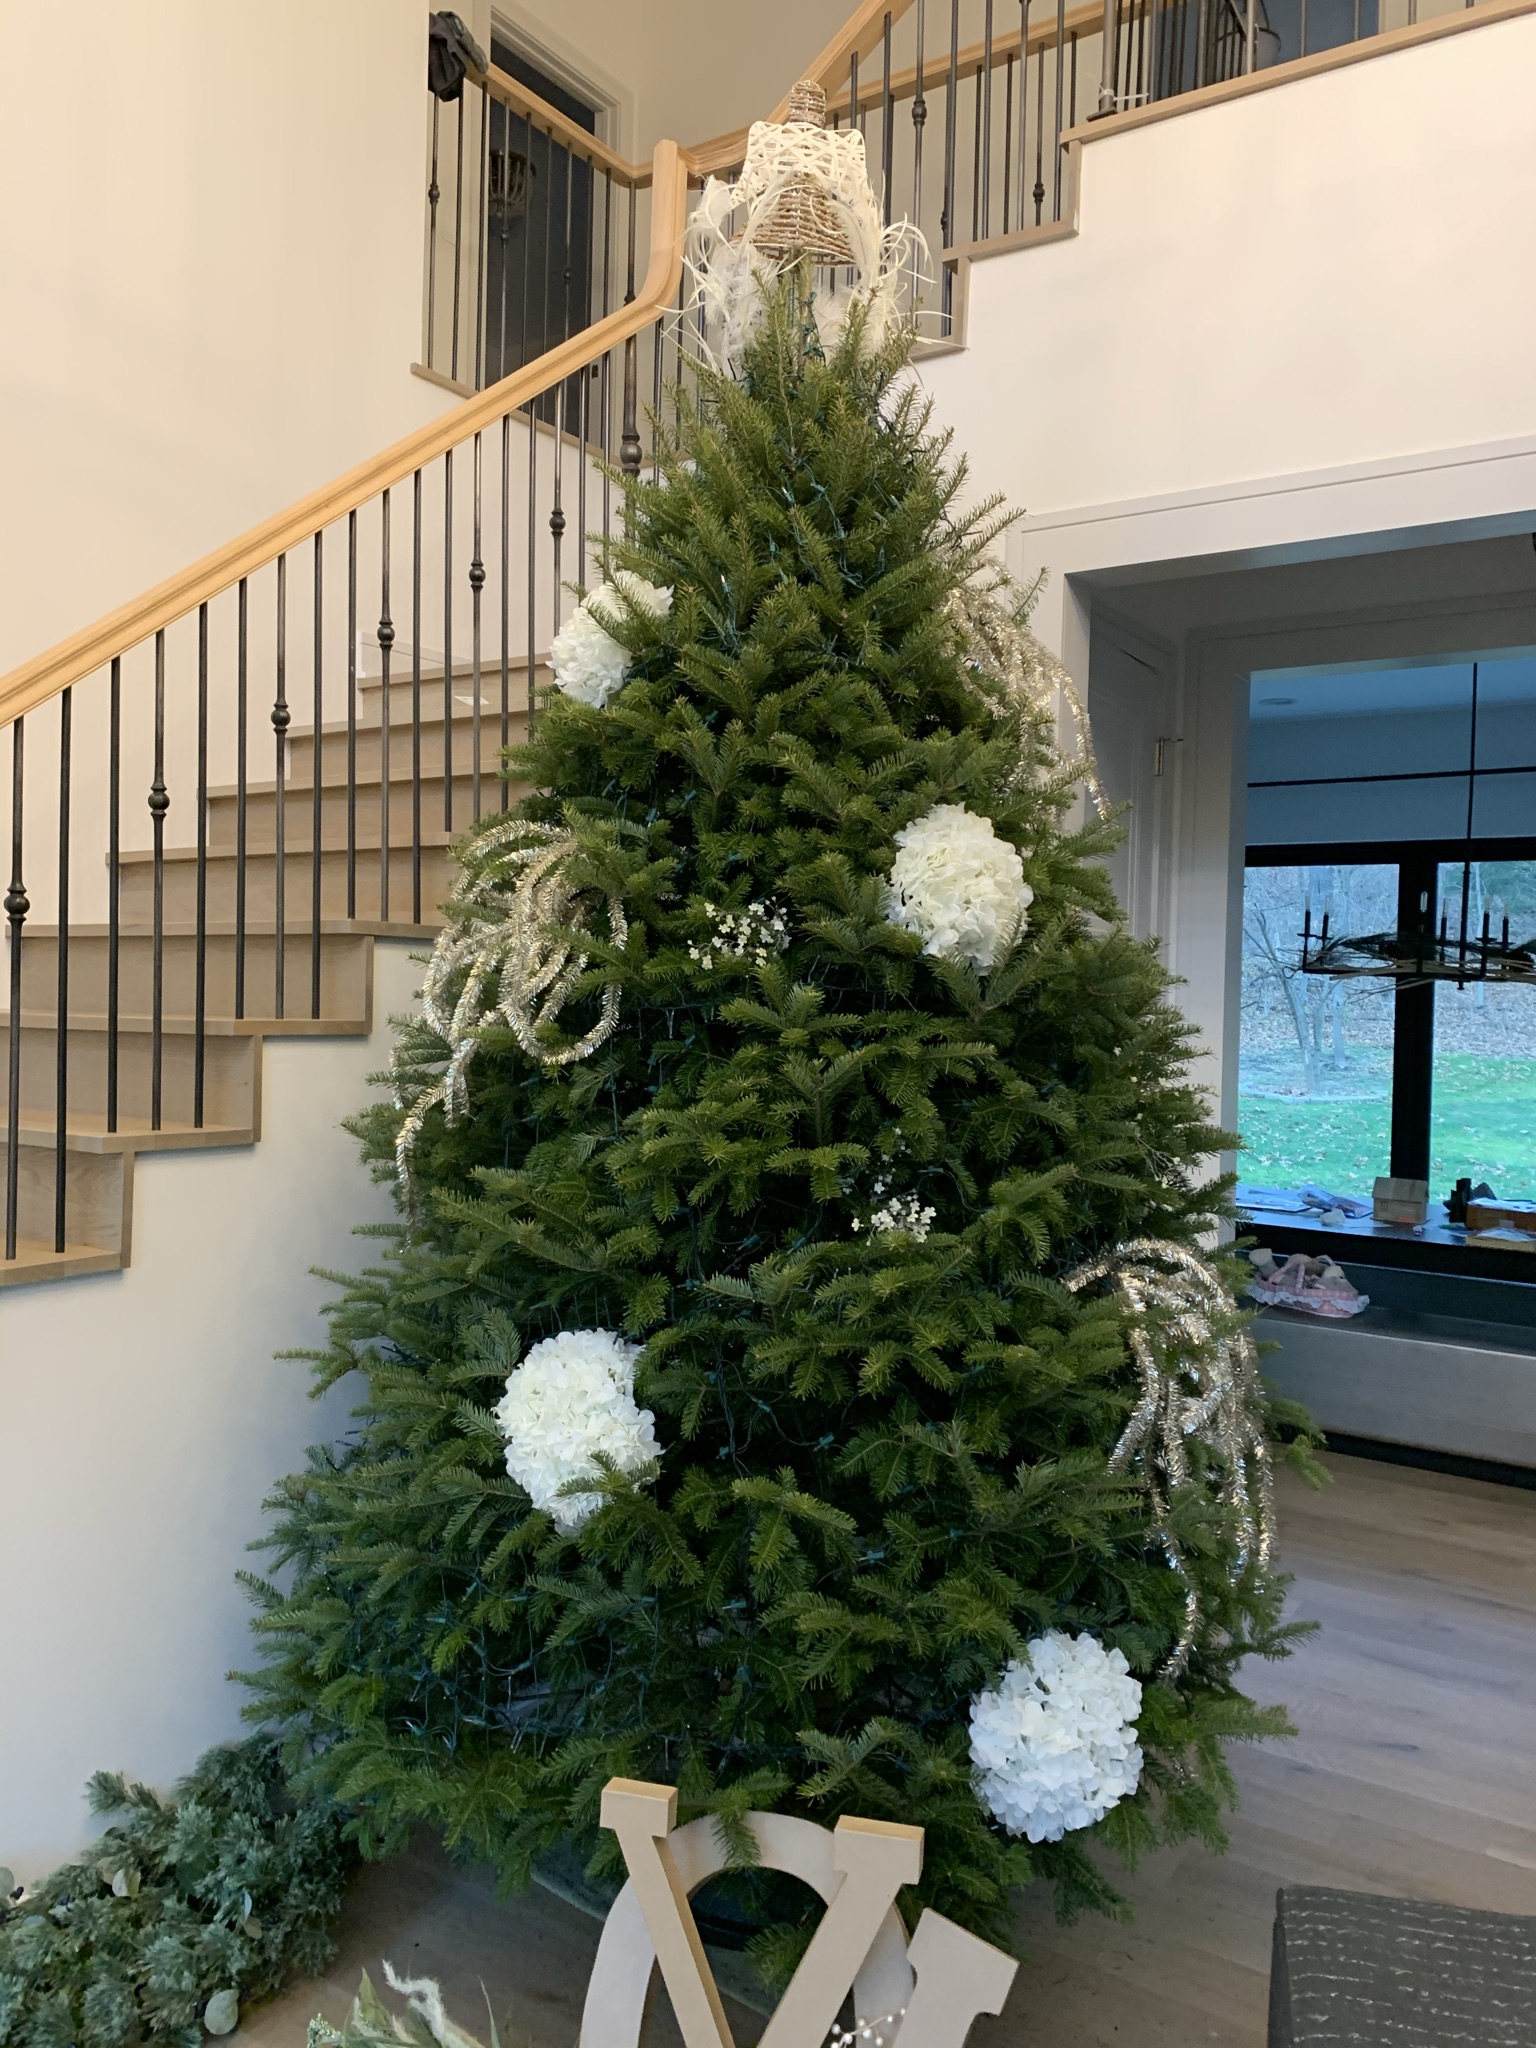 Designer tips for Christmas tree decorating 